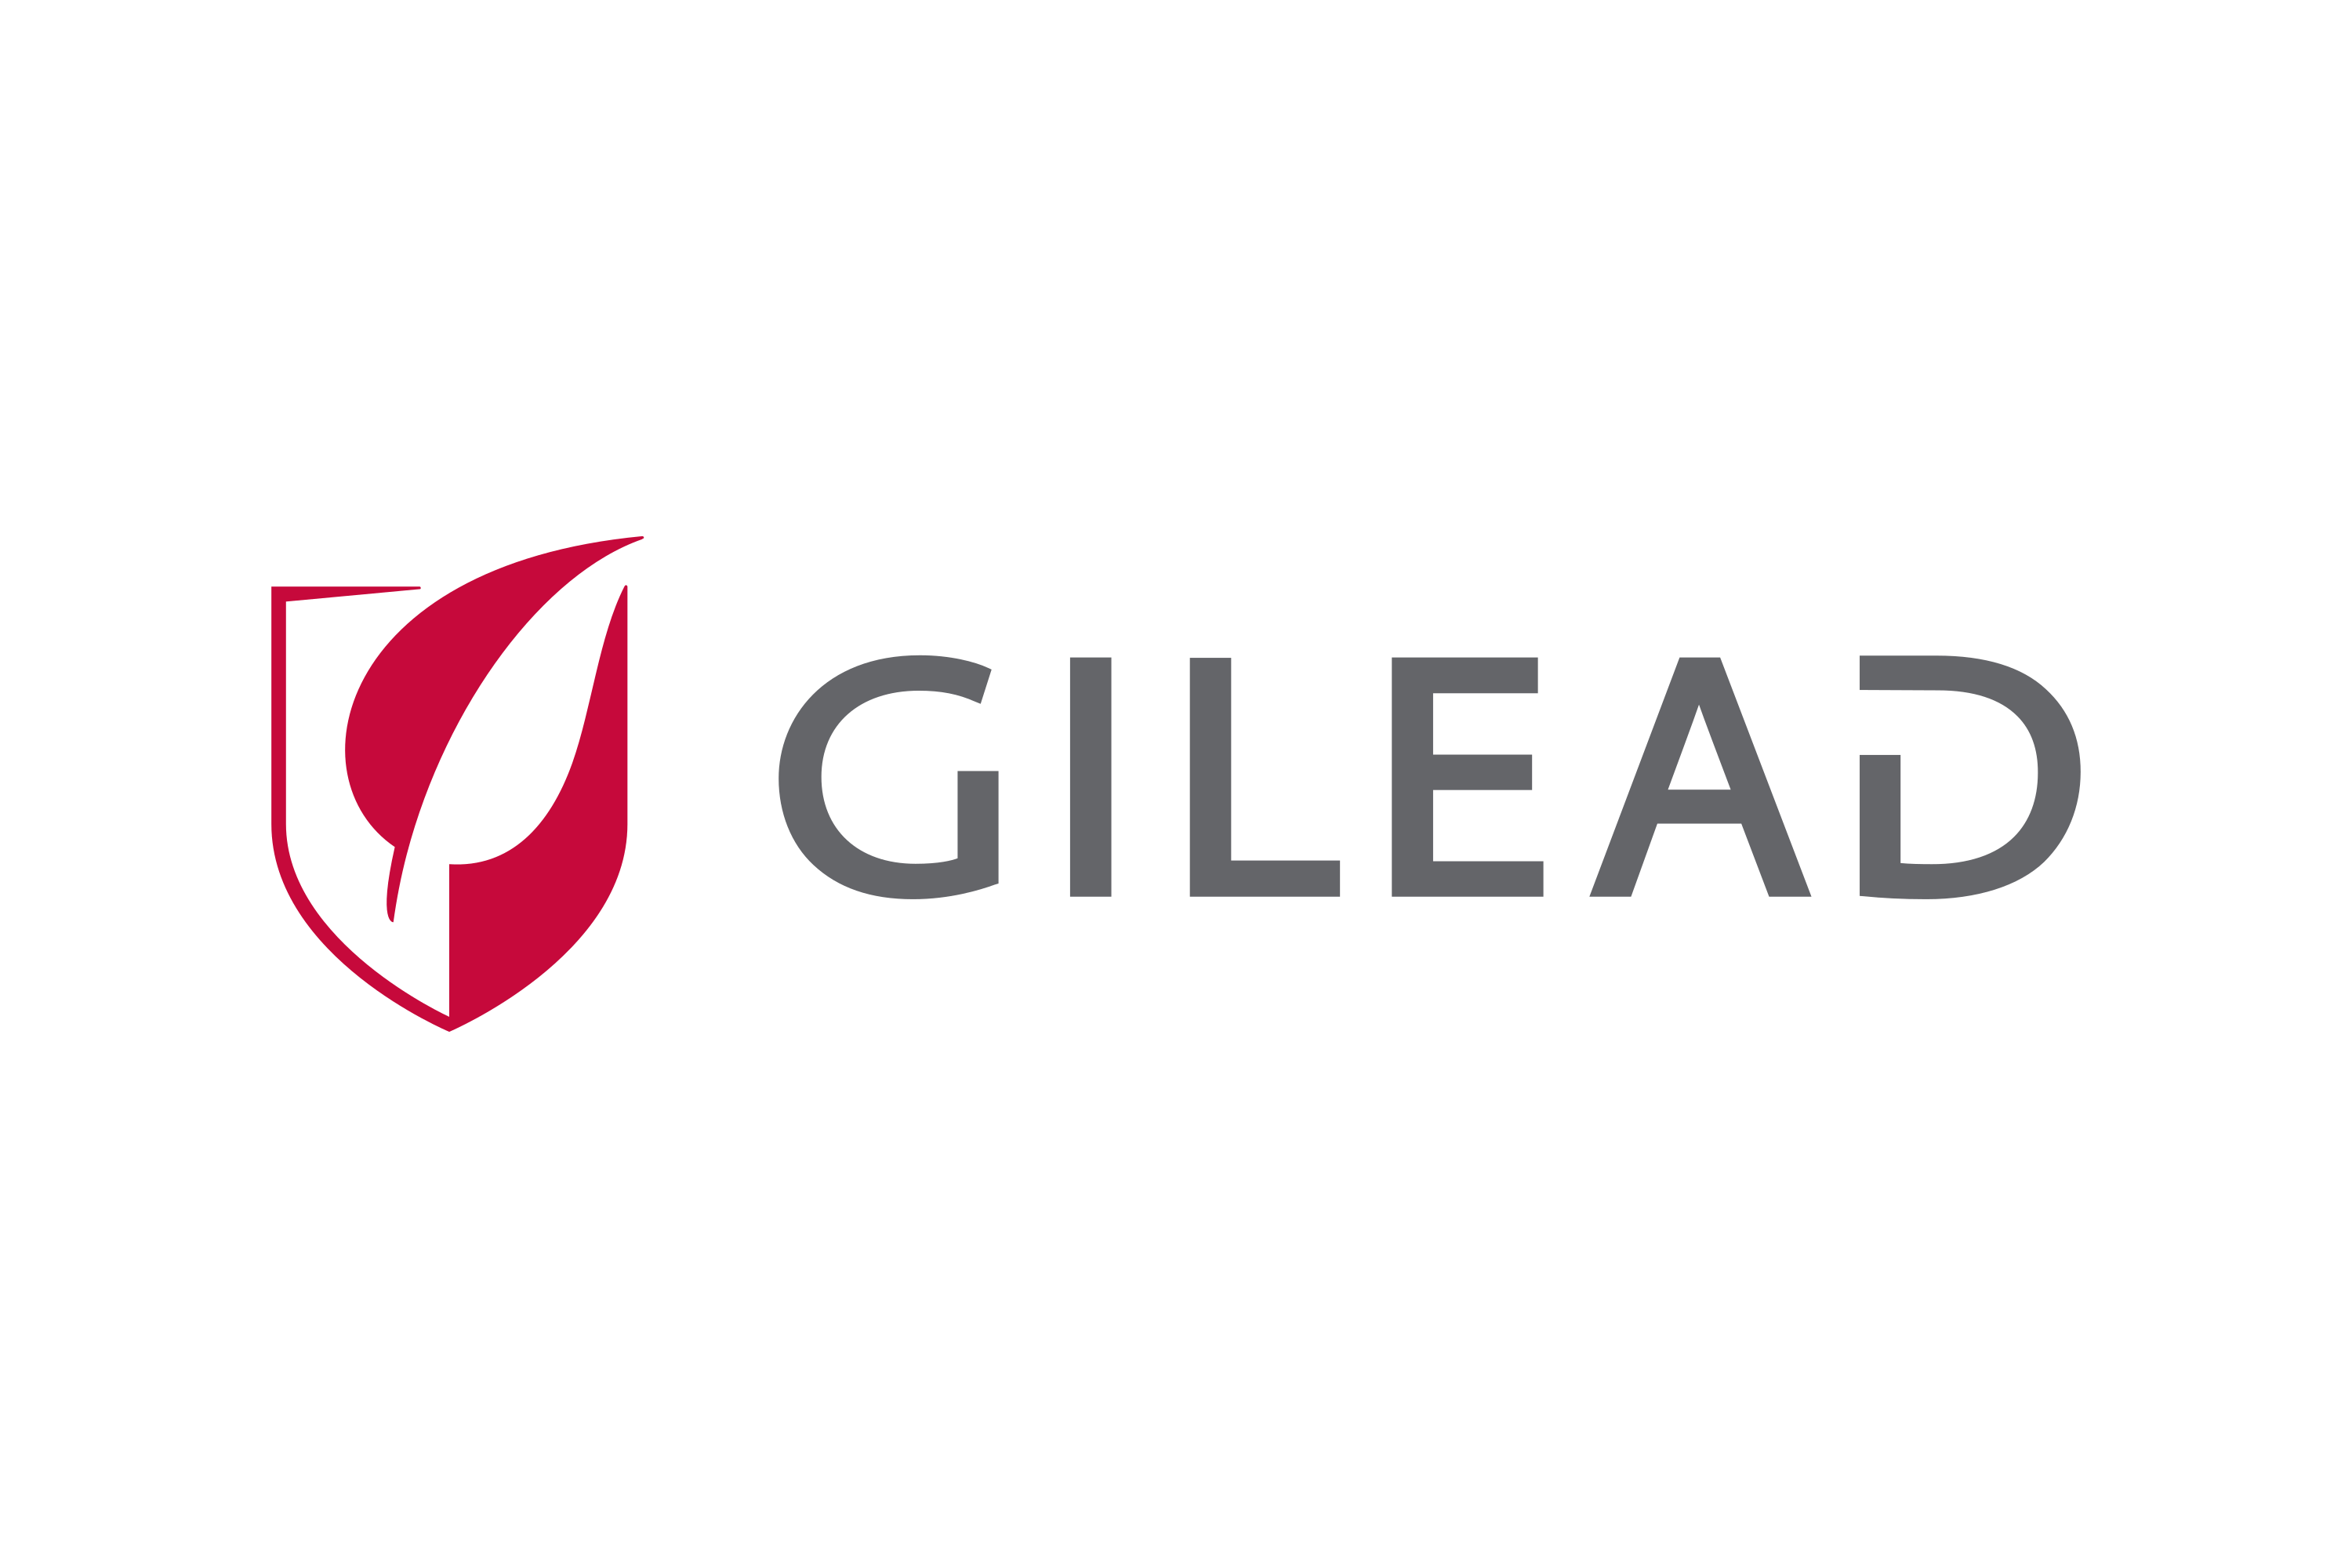 Gilead Sciences Colors